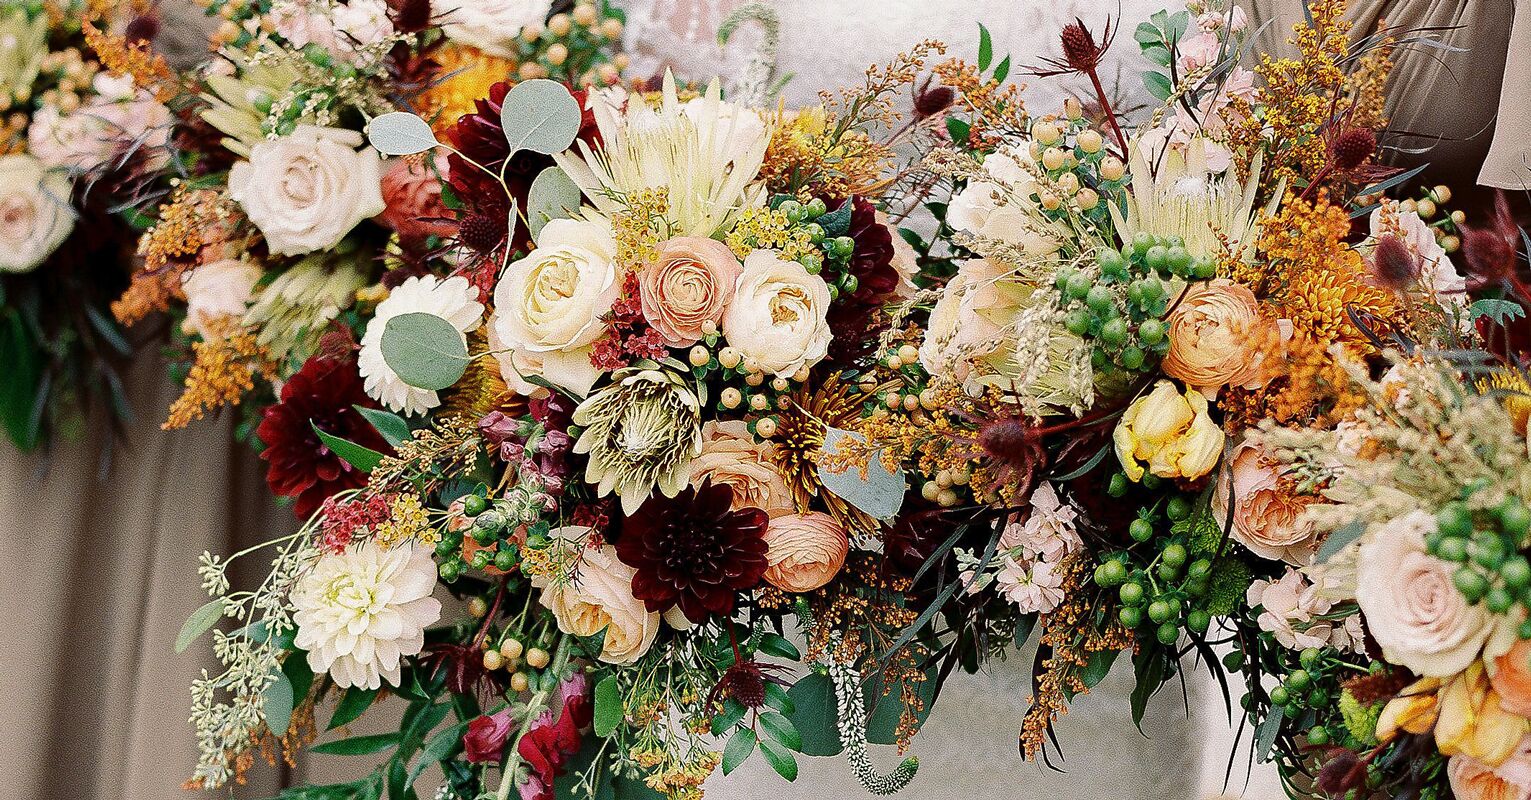 20 Mini Open Roses MANY COLORS Wedding Centerpieces Bridal Bouquet Silk Flowers